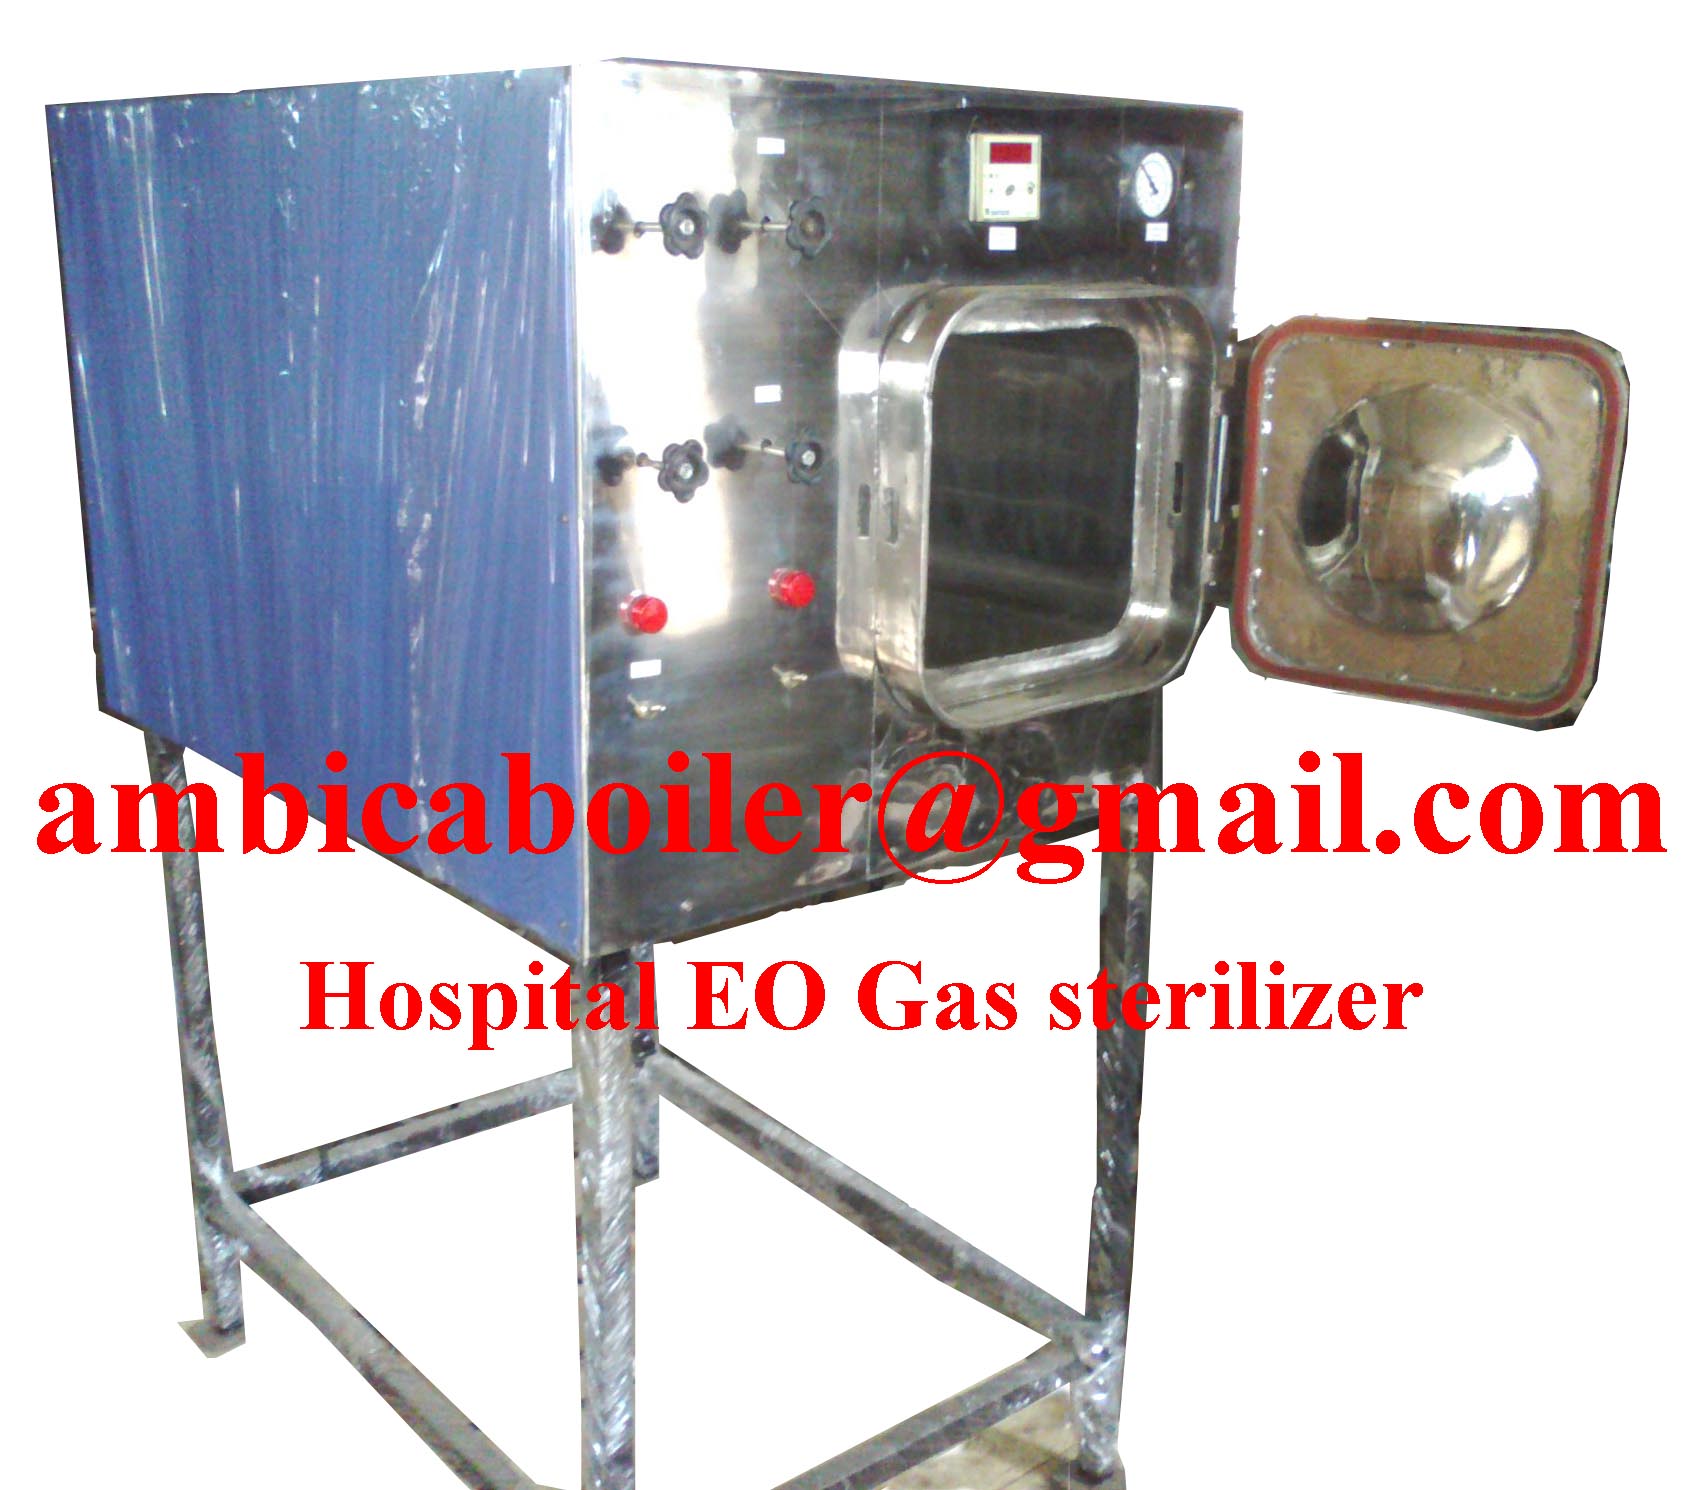 Hospital eto gas sterilizer